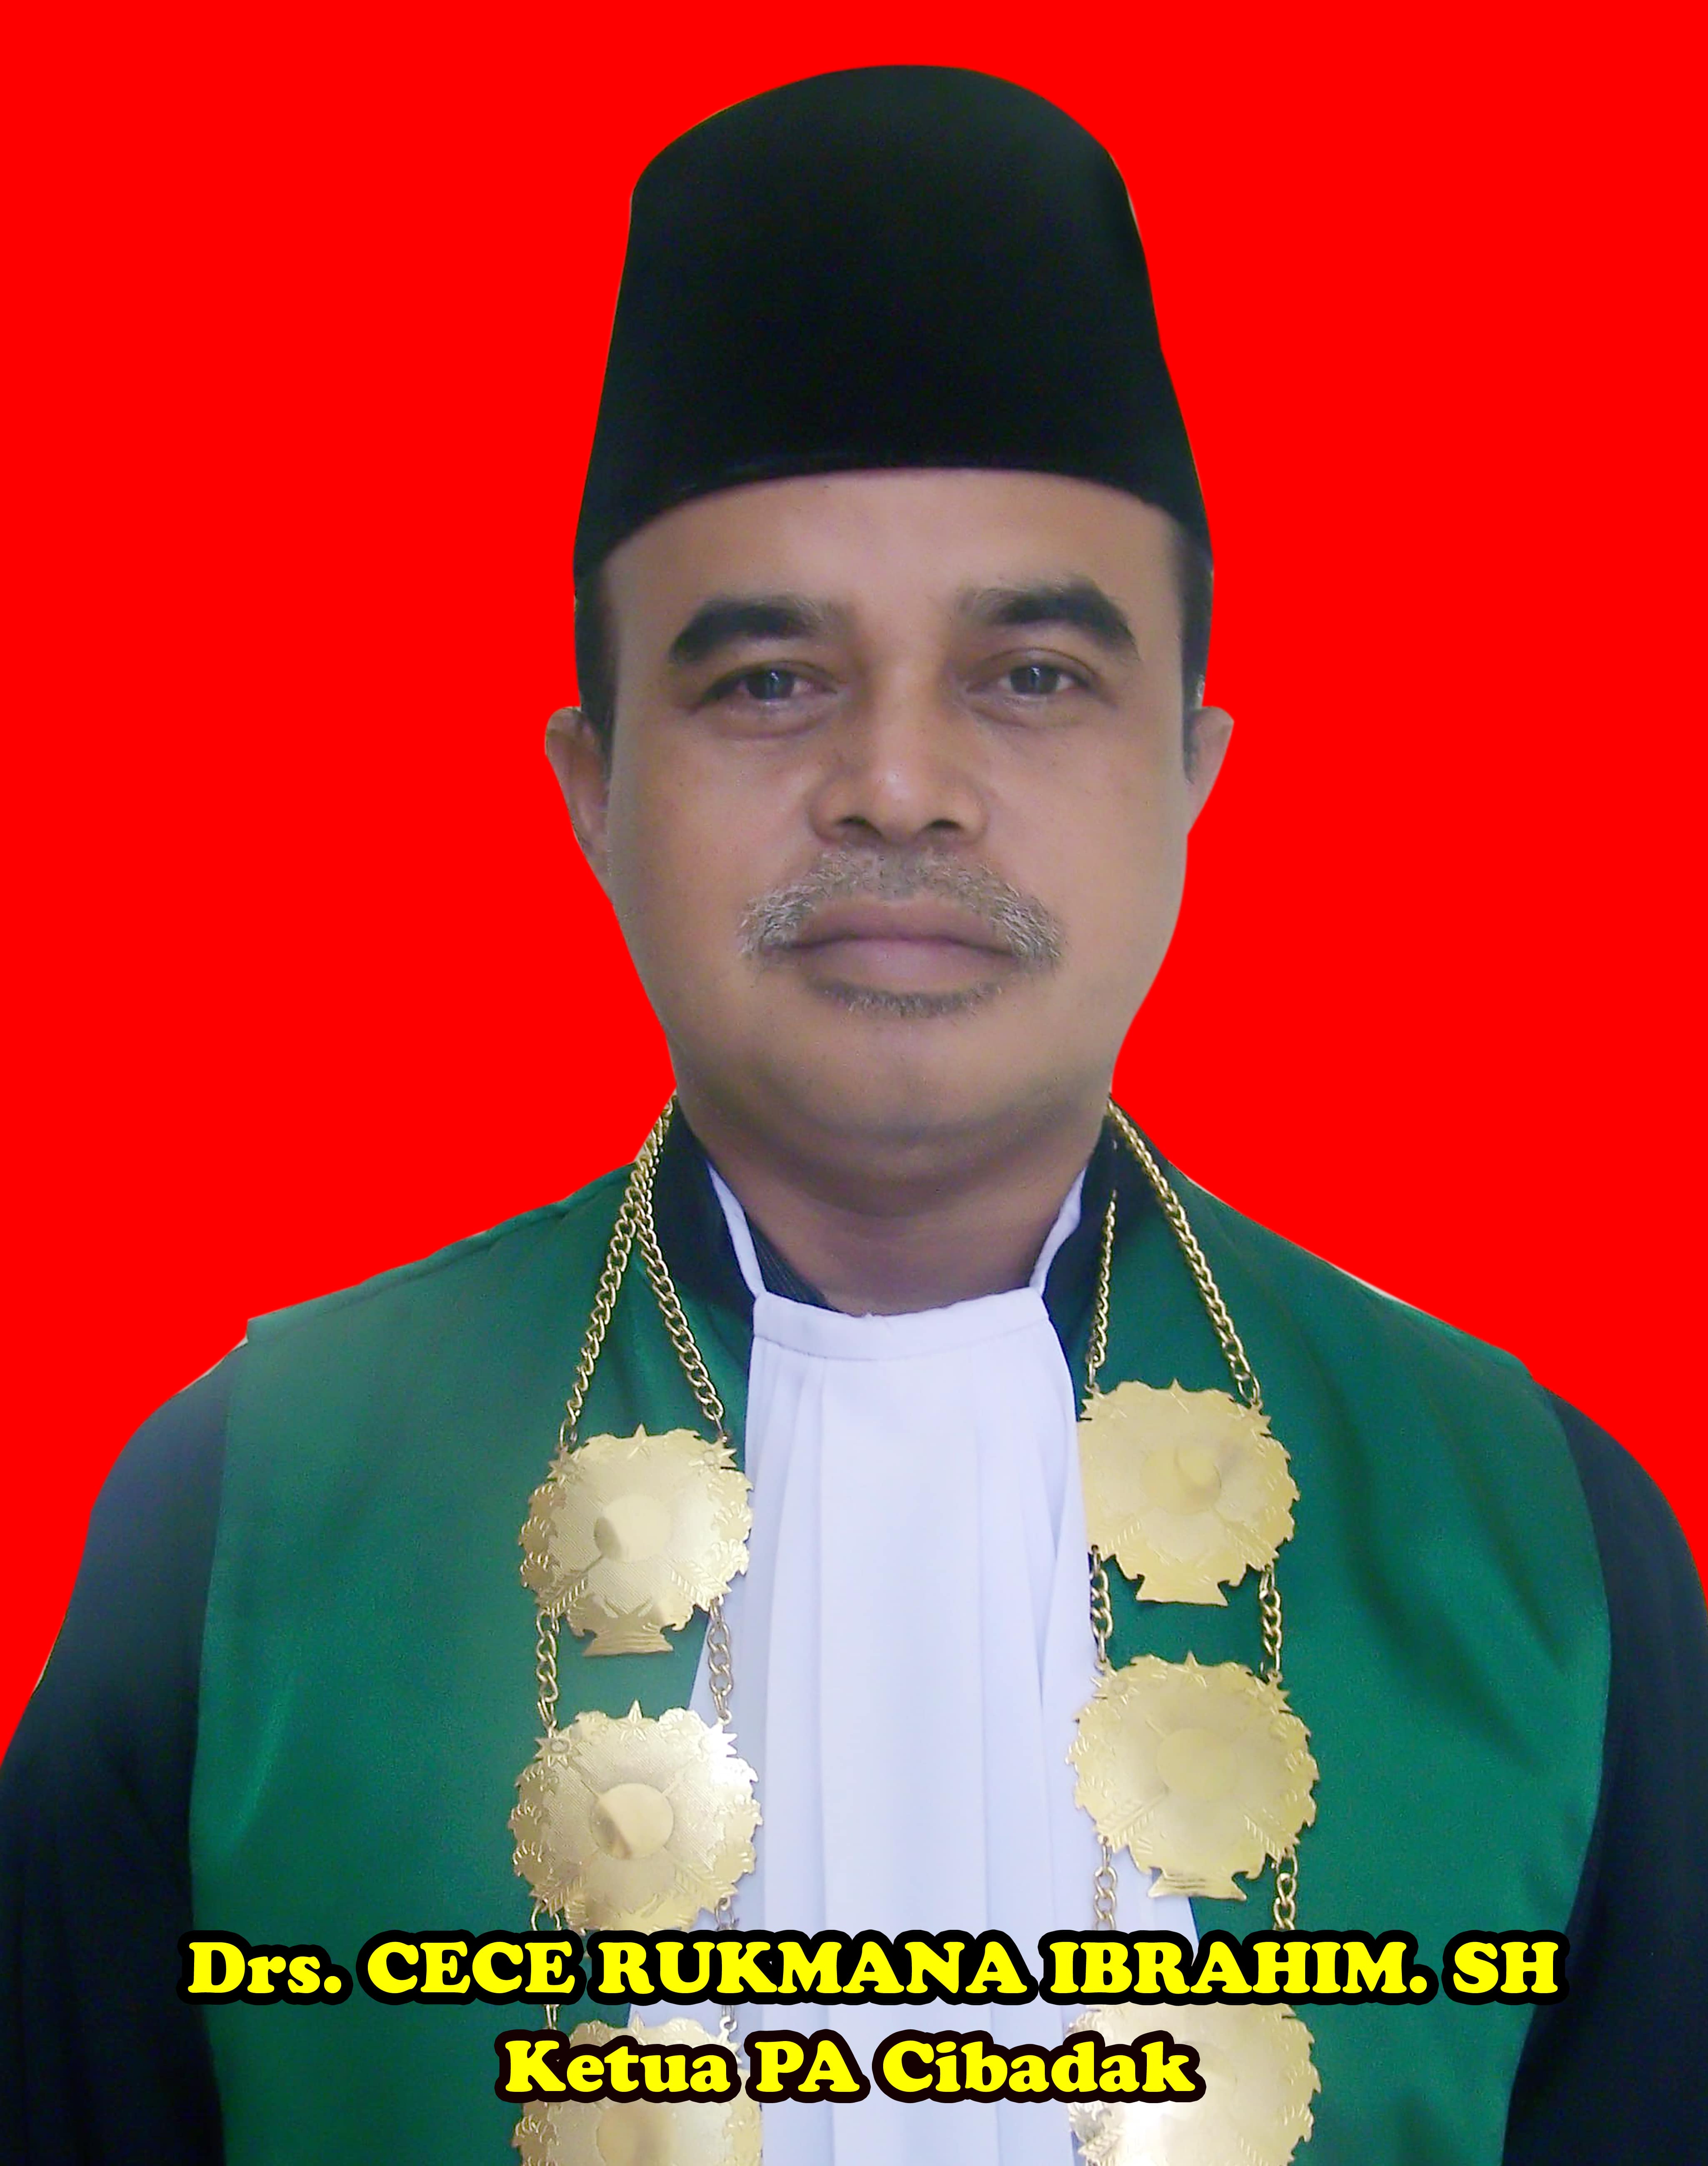 Drs. Cece Rukmana Ibrahim S.H. M.H min